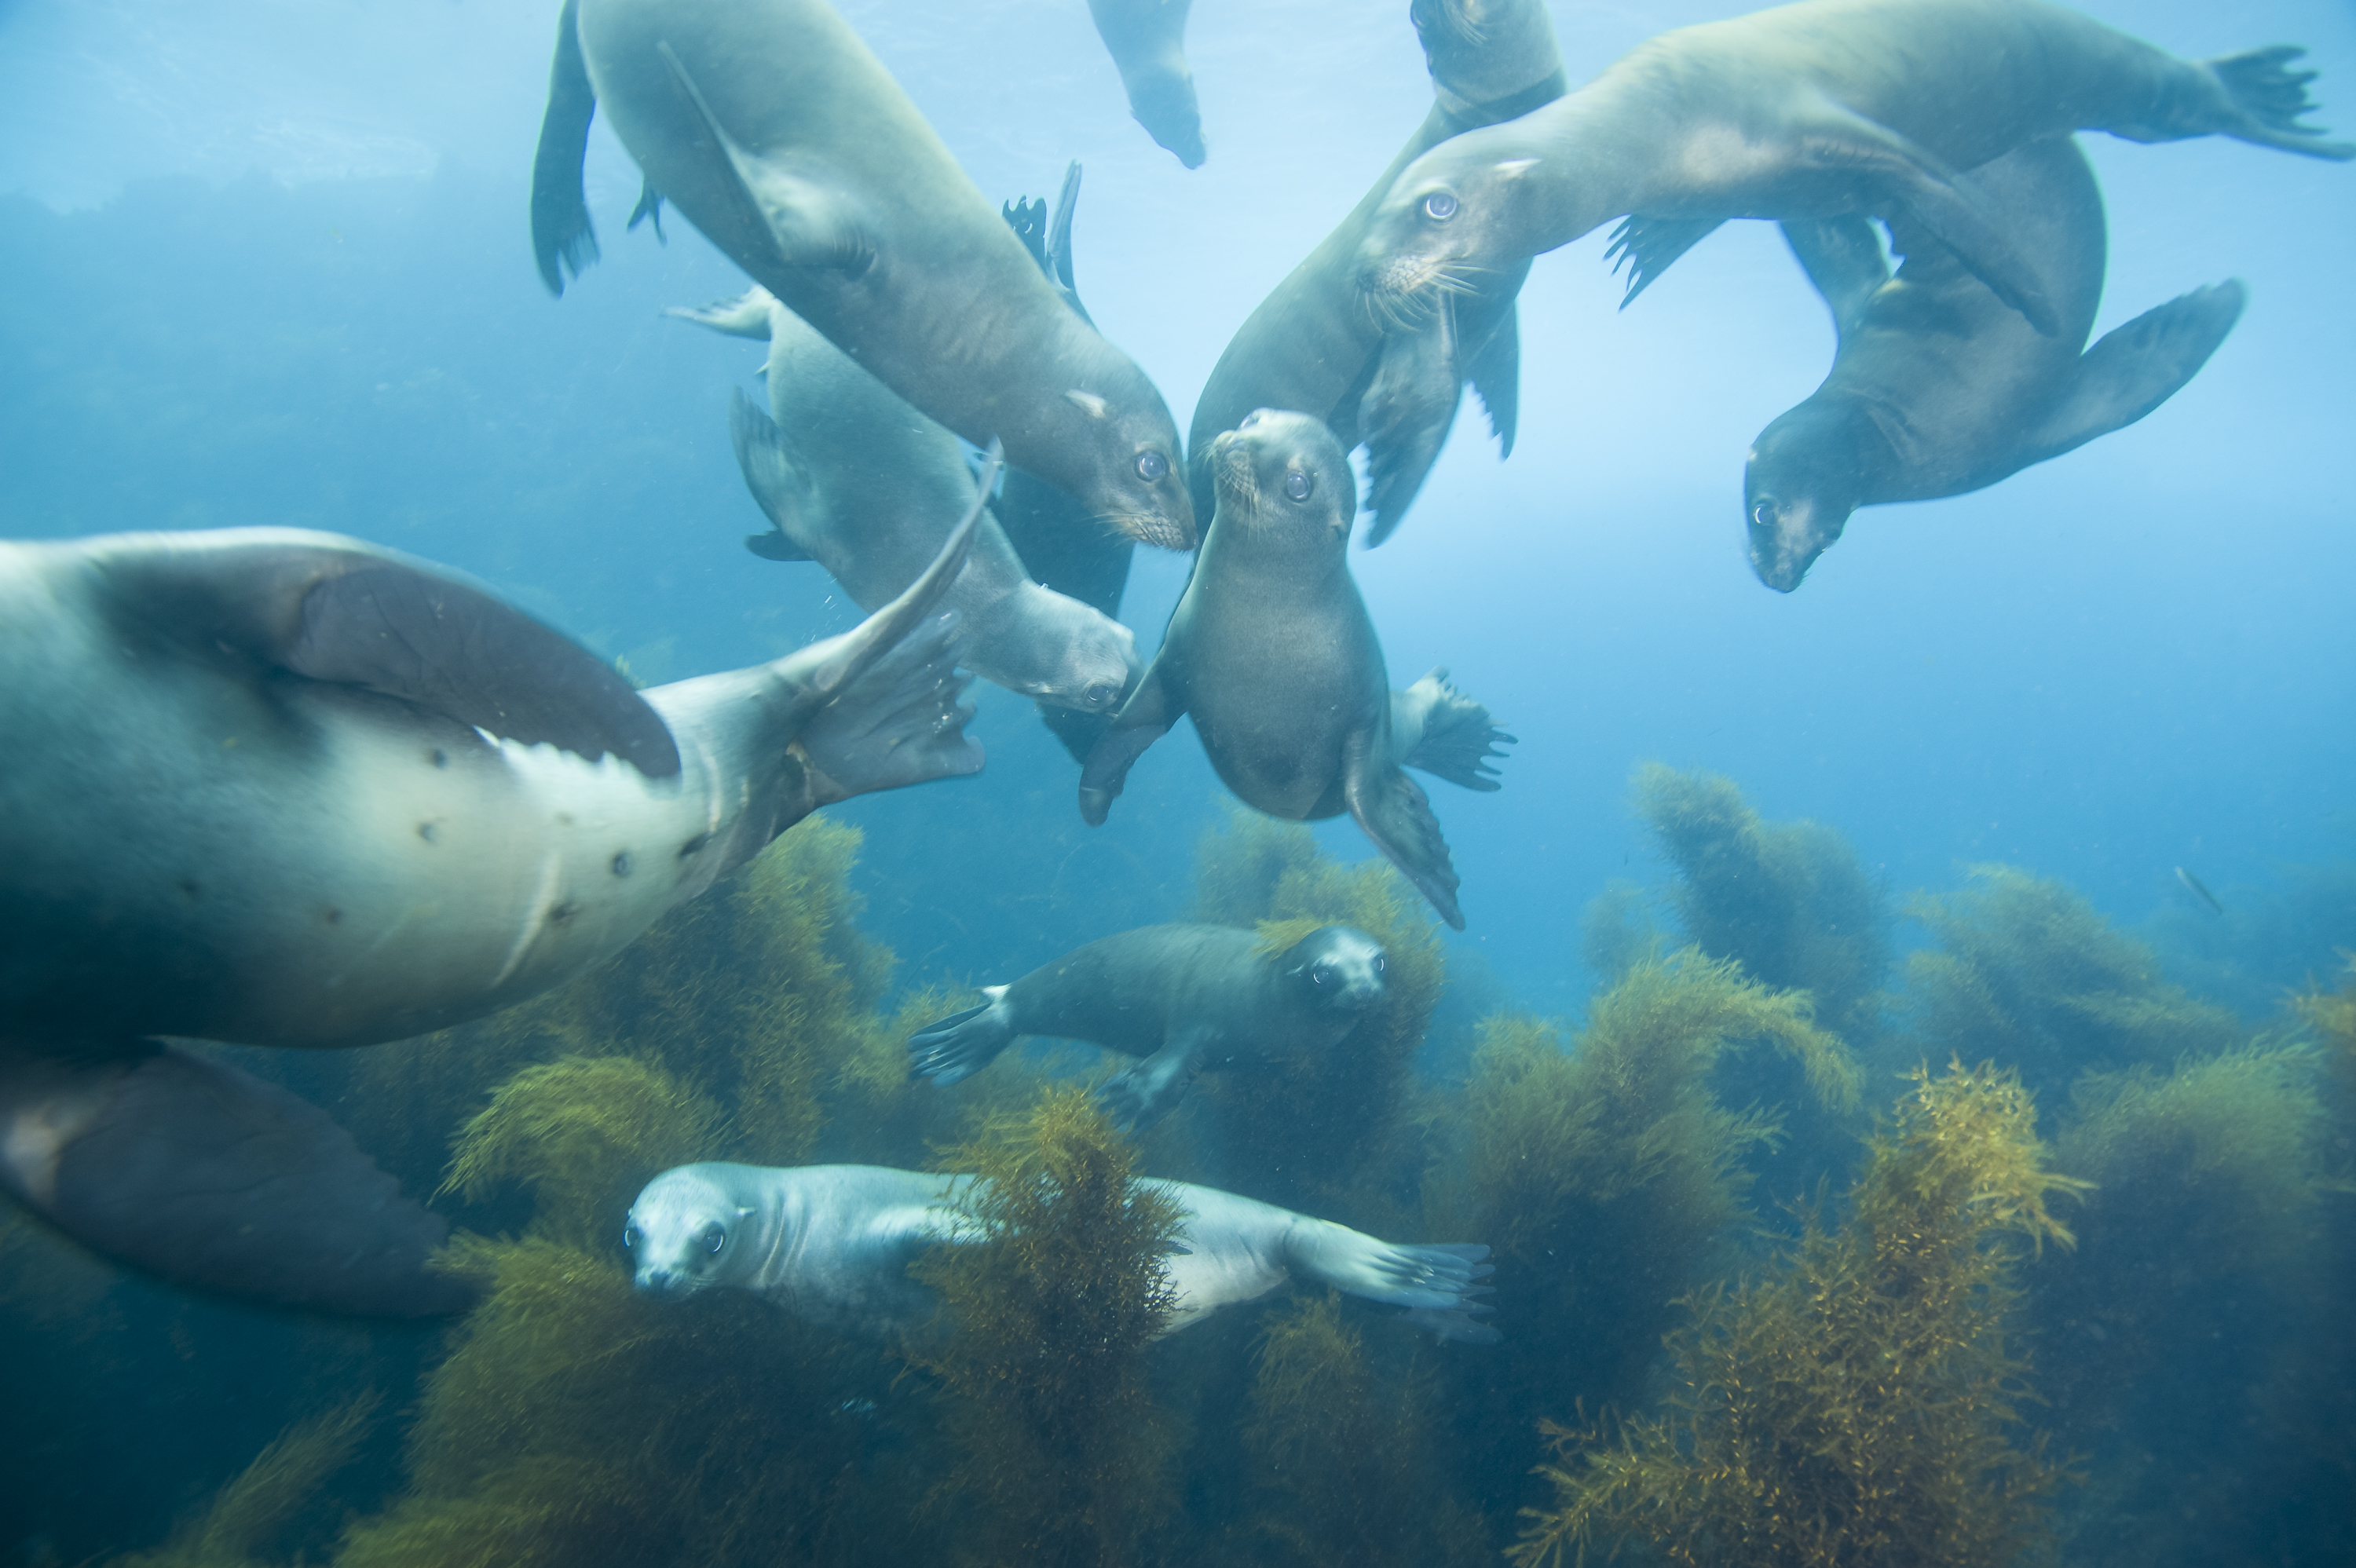 California sea lions at Coronado Islands, Mexico, by Matthew Meier